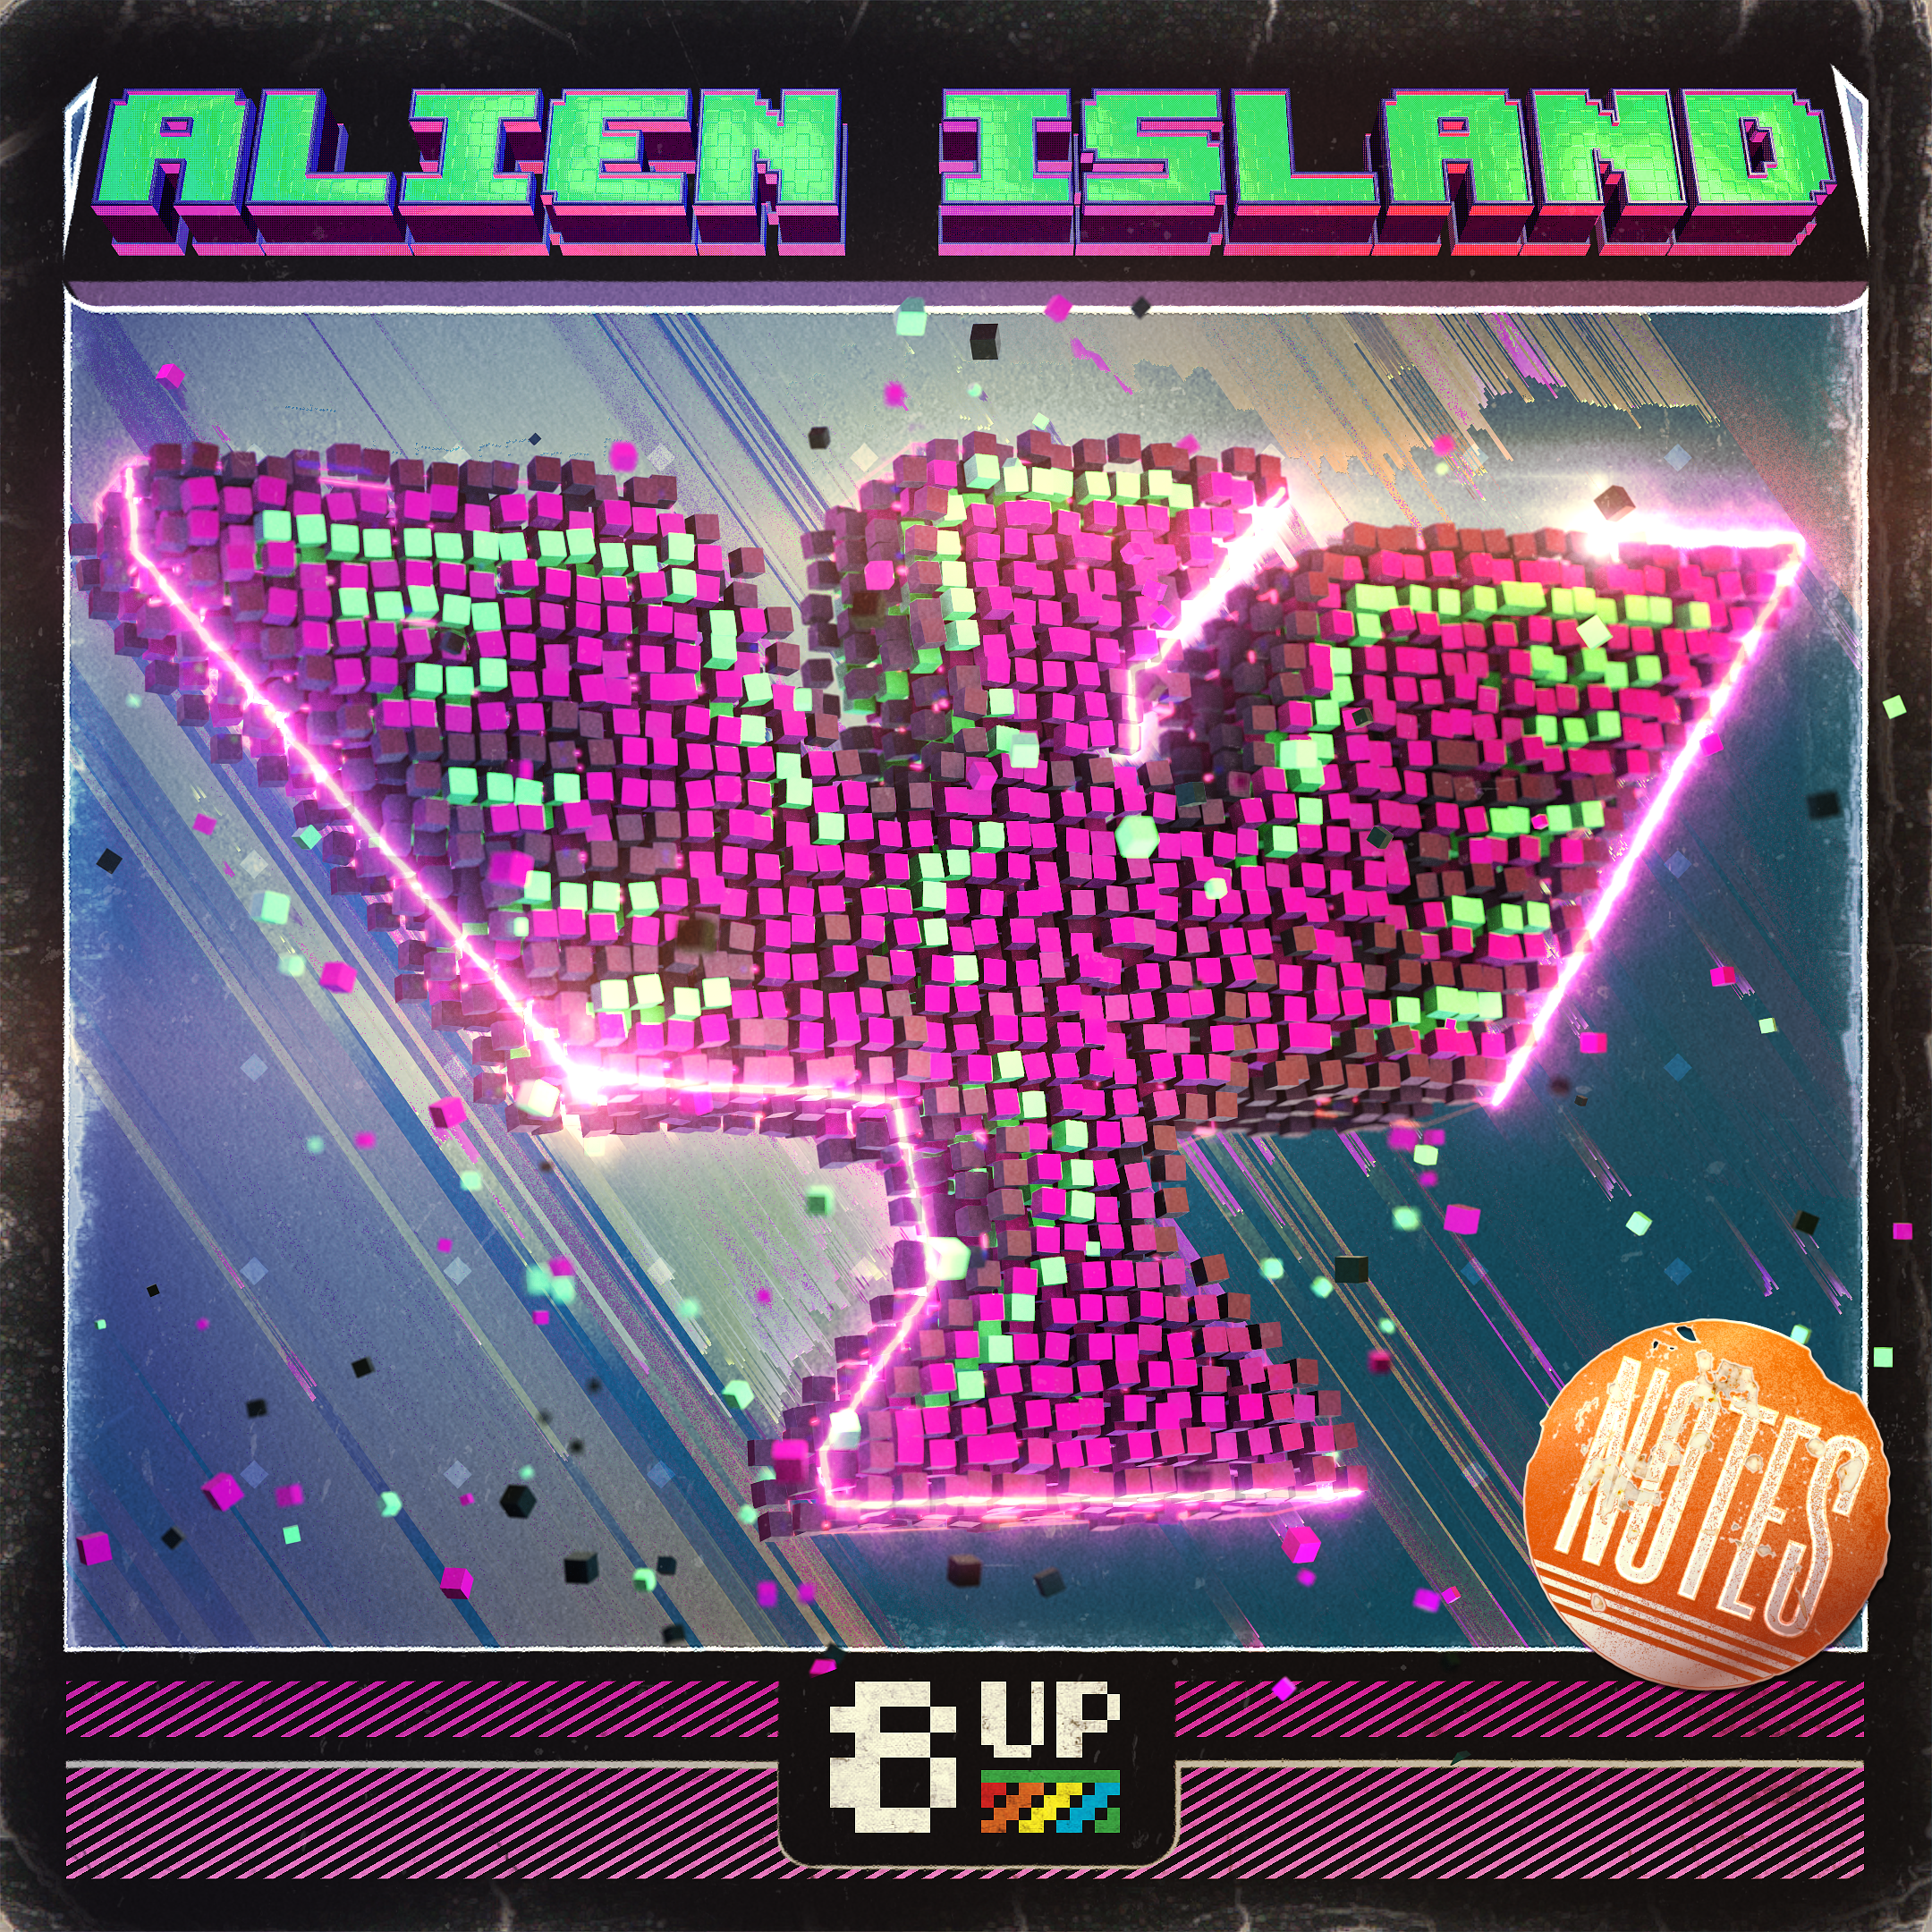 Alien Island Notes Packshot by 8UP